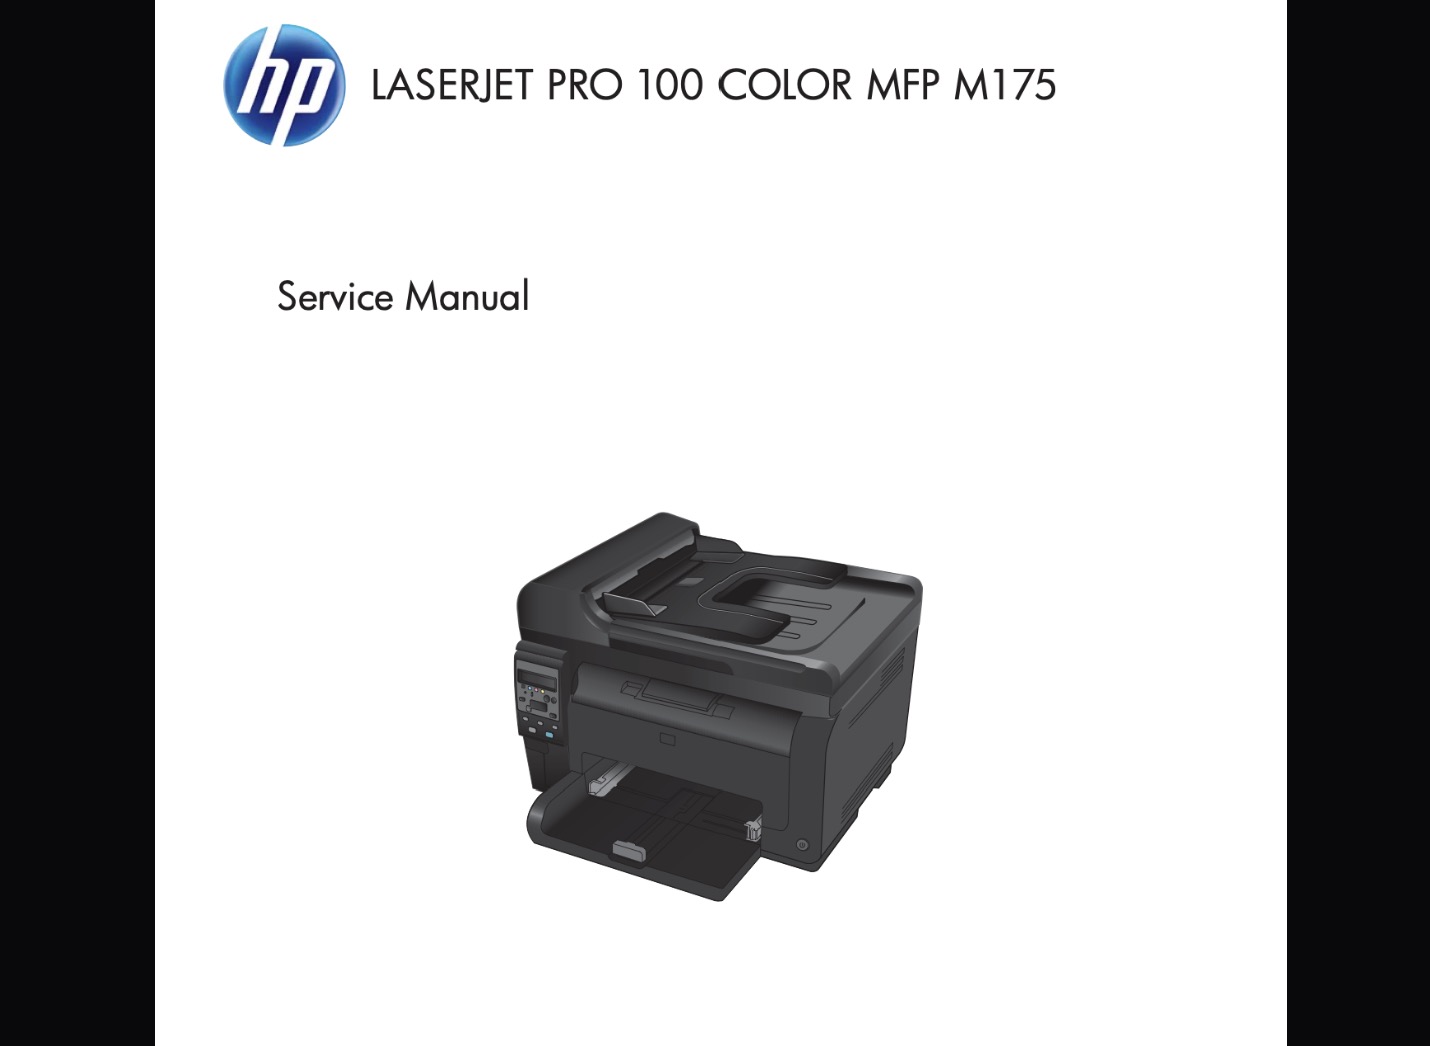 HP Color LaserJet Pro 100 color MFP M175 <br> Service Manual, Parts and Diagrams